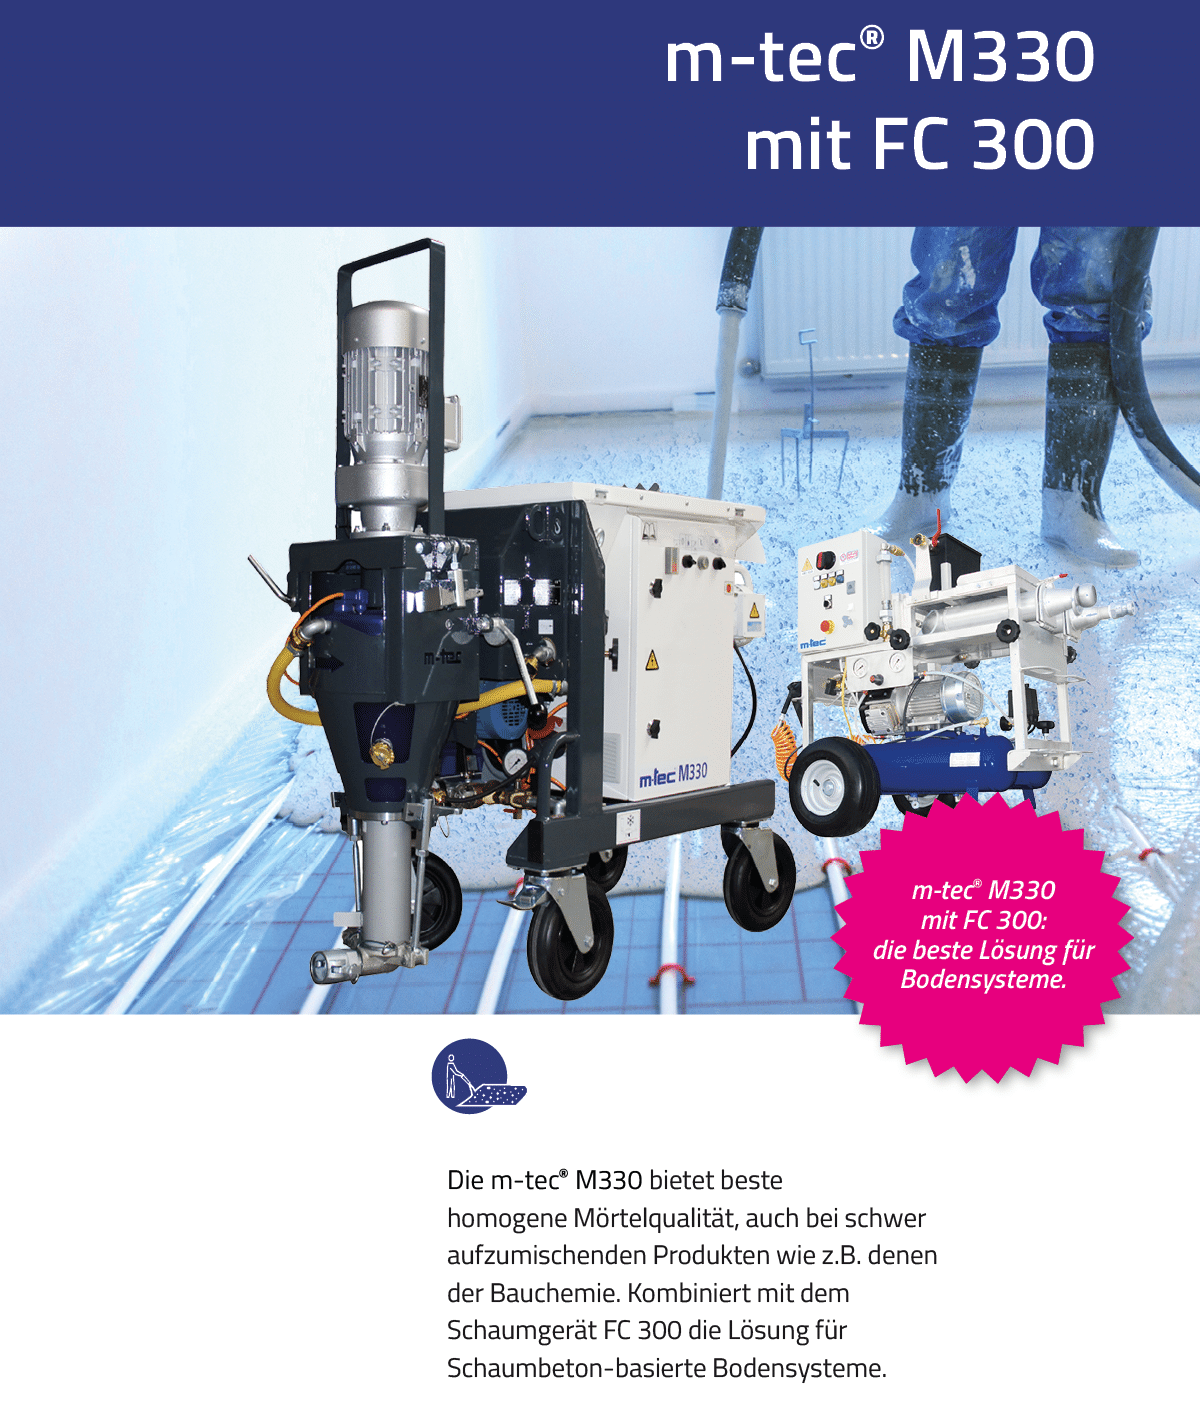 M330 mit FC 300